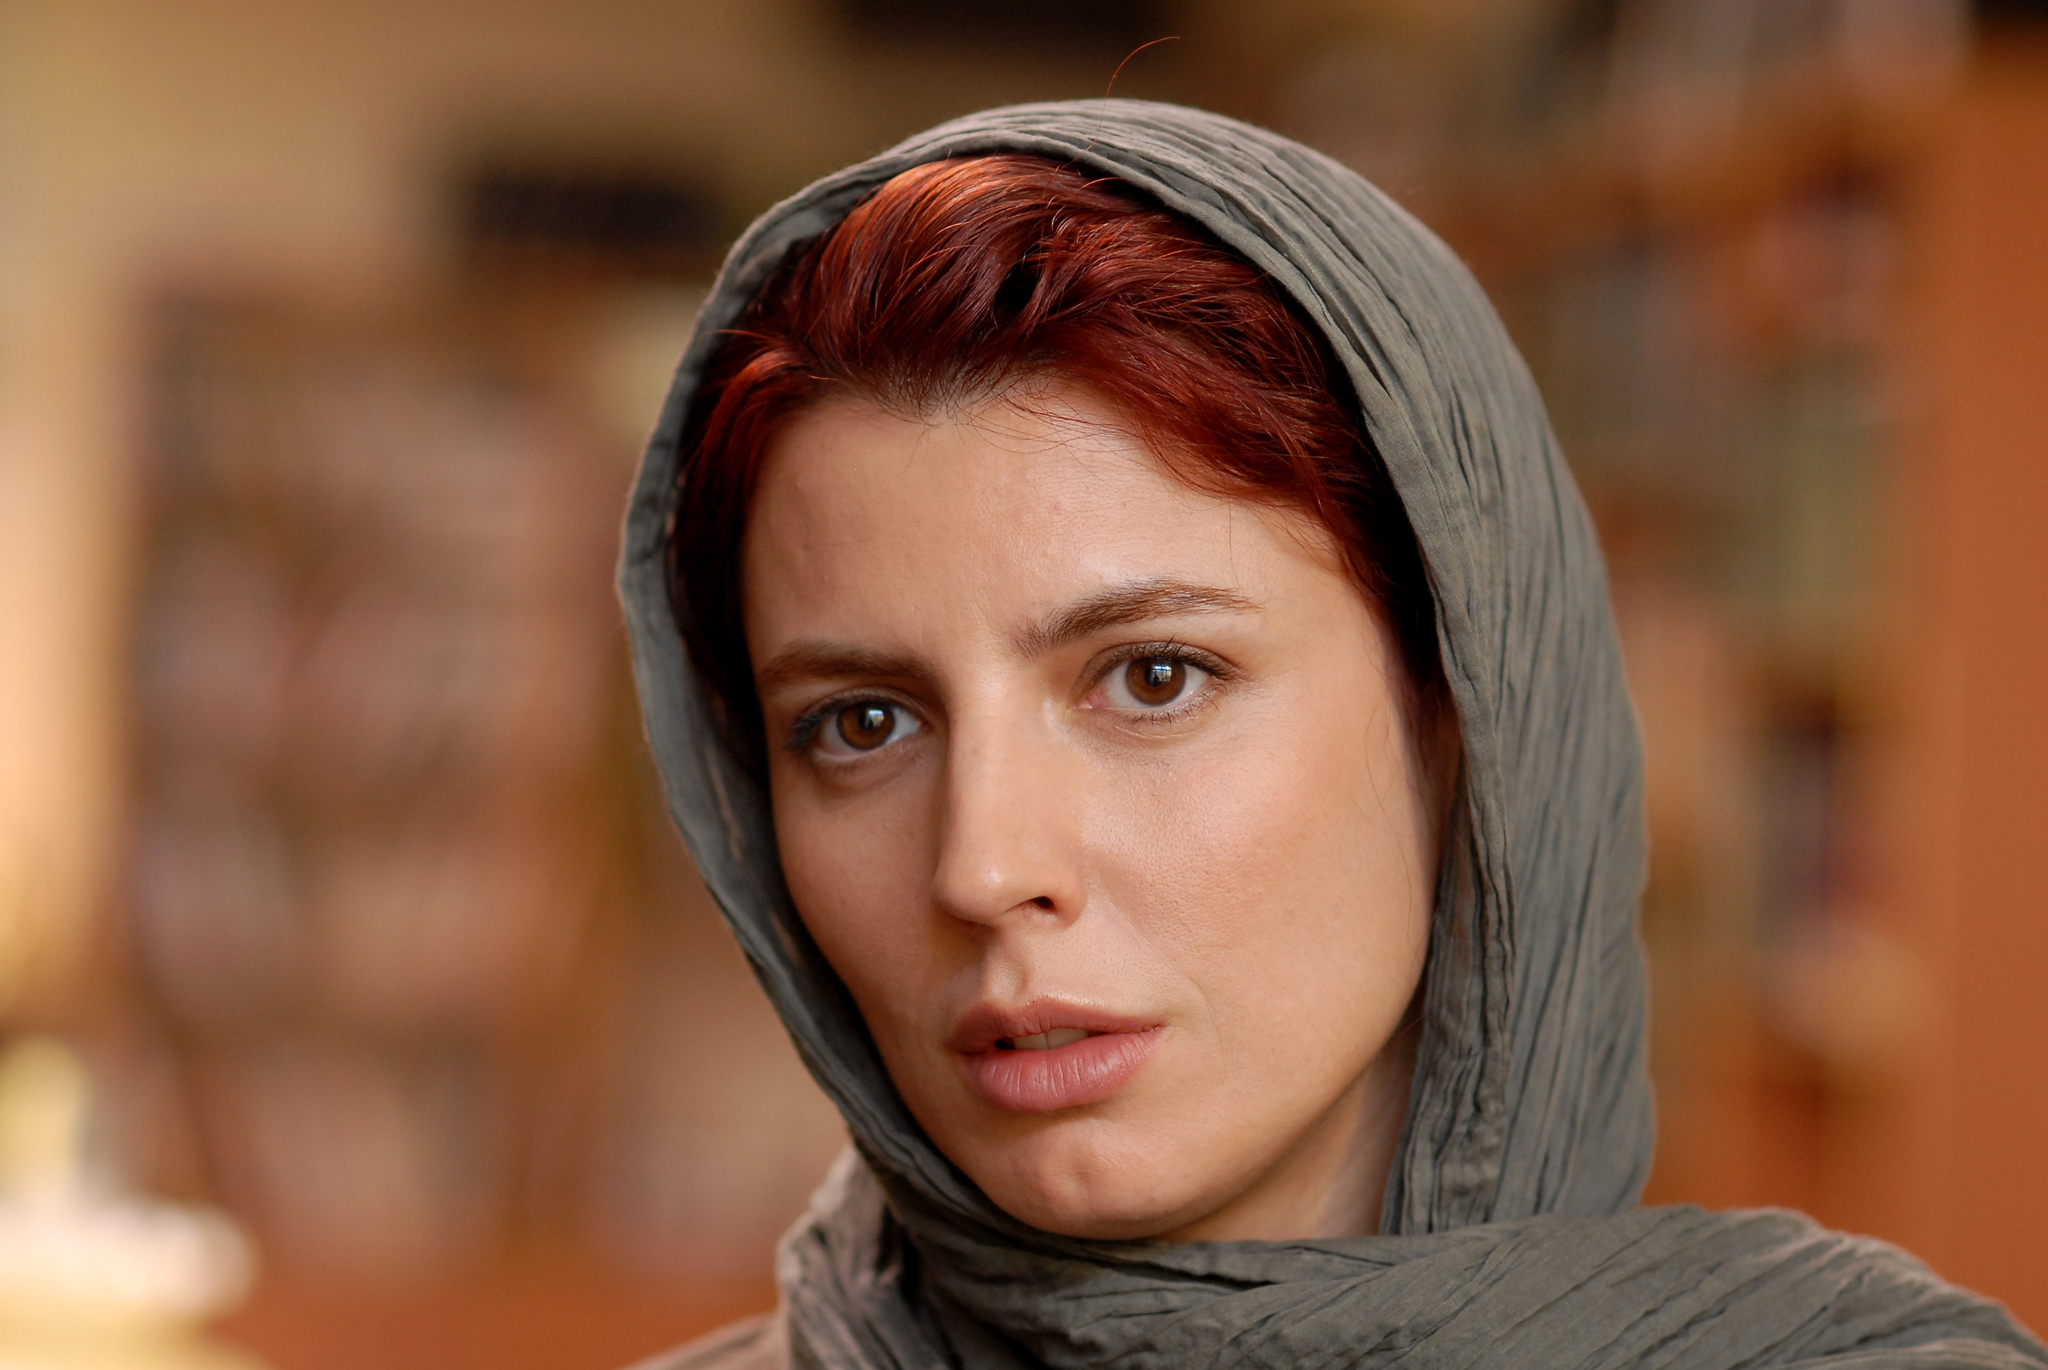 Leila hatami (Iran) - Honourable mention